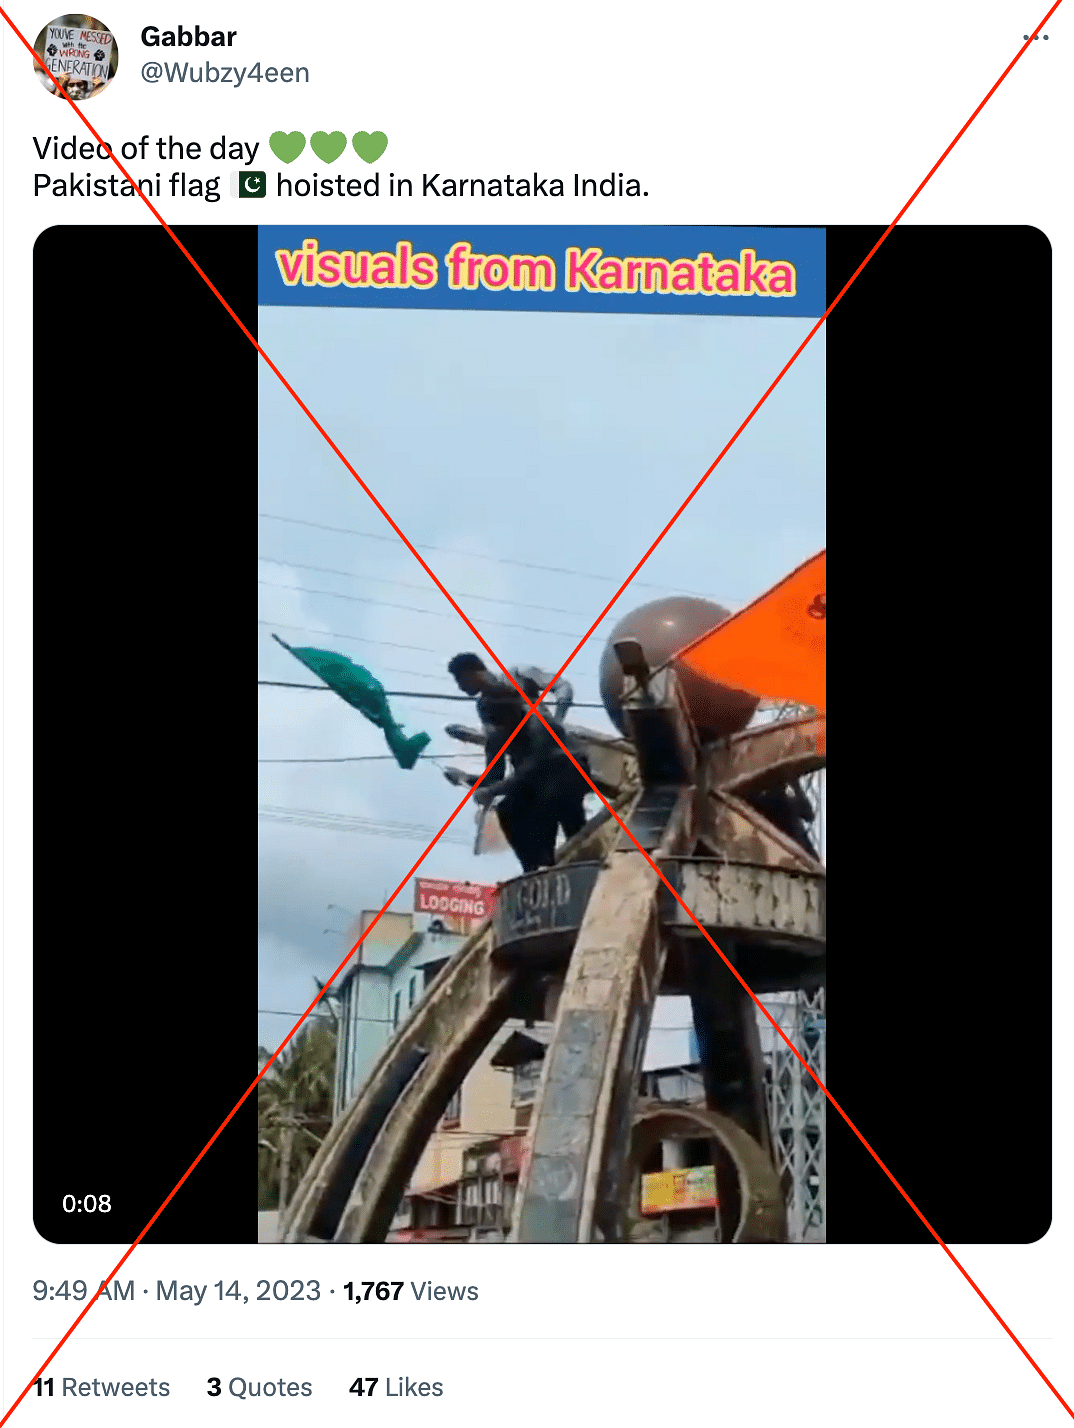 Uttara Kannada SP Vishnuvardhana N told the media that the flag raised in Bhatkal was not Pakistan's national flag.